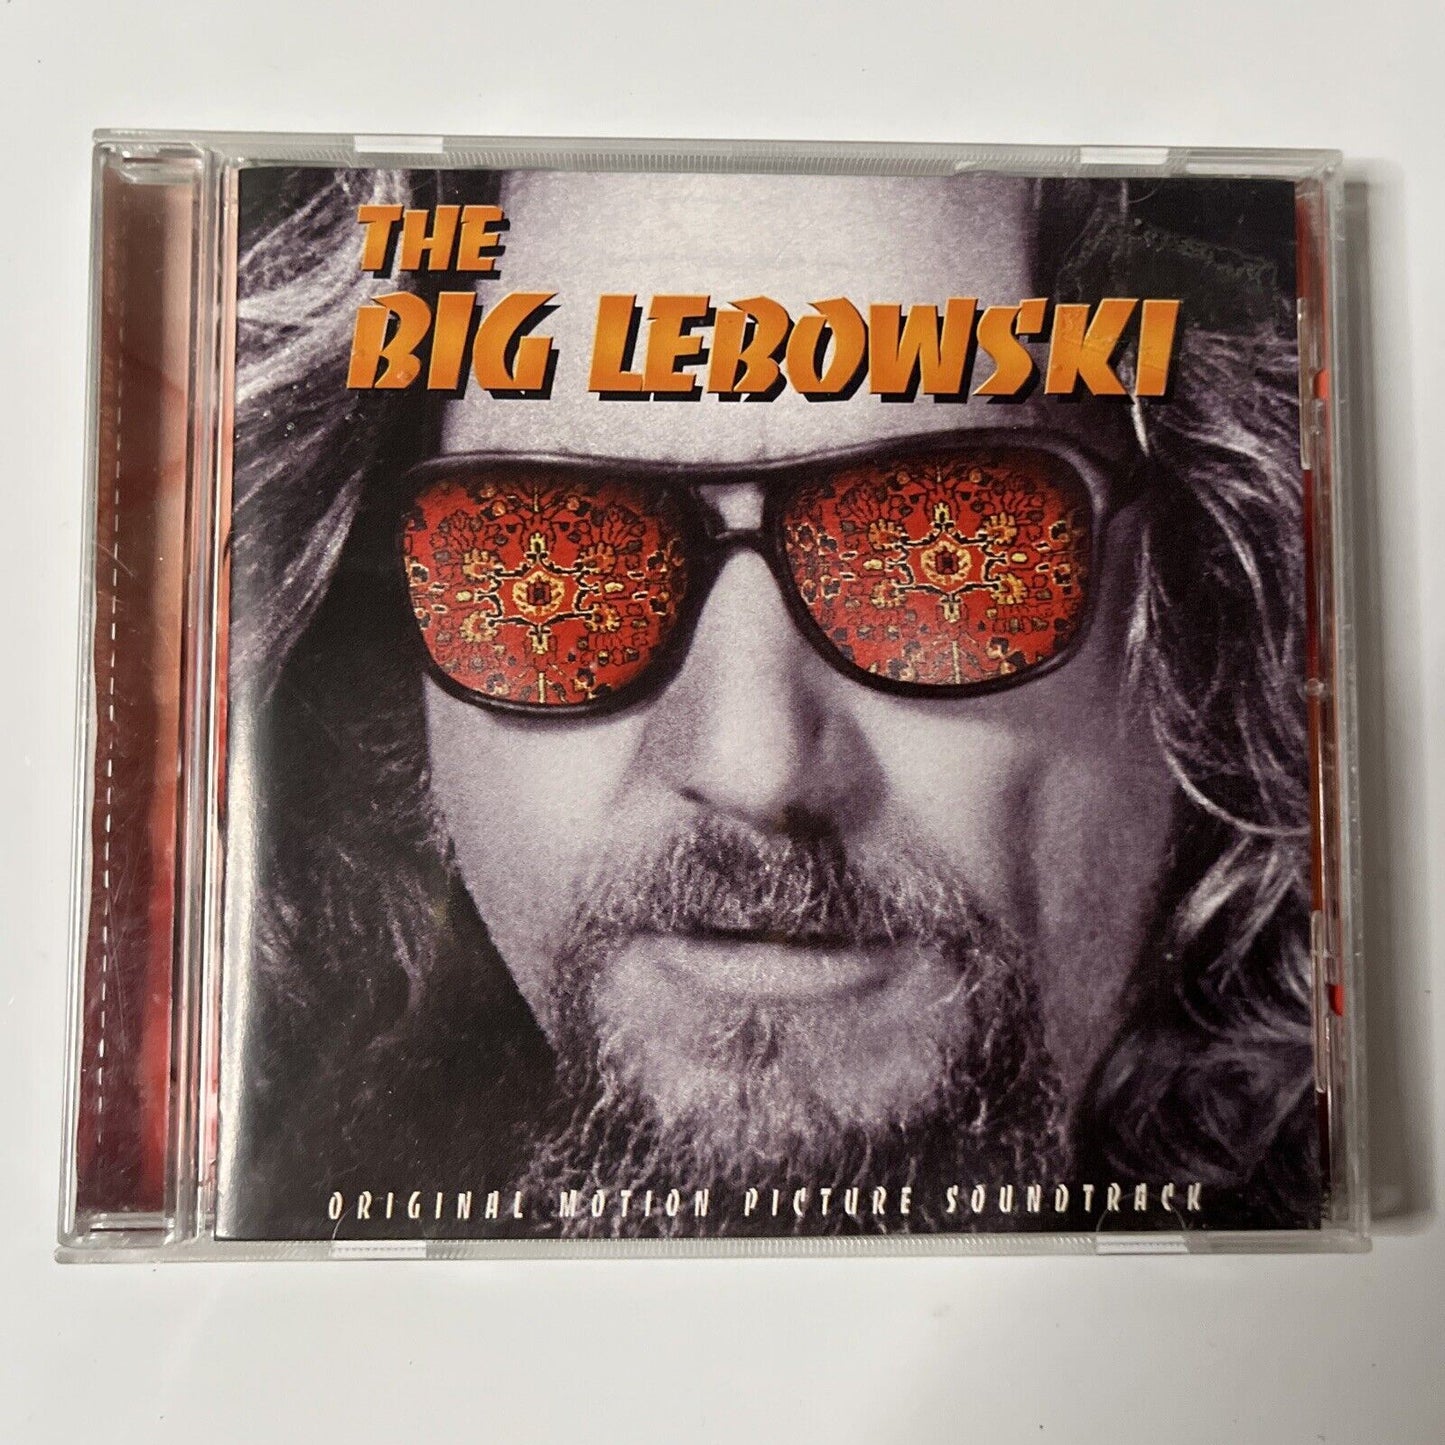 The Big Lebowski by Original Motion Picture Soundtrack (CD, 1998)